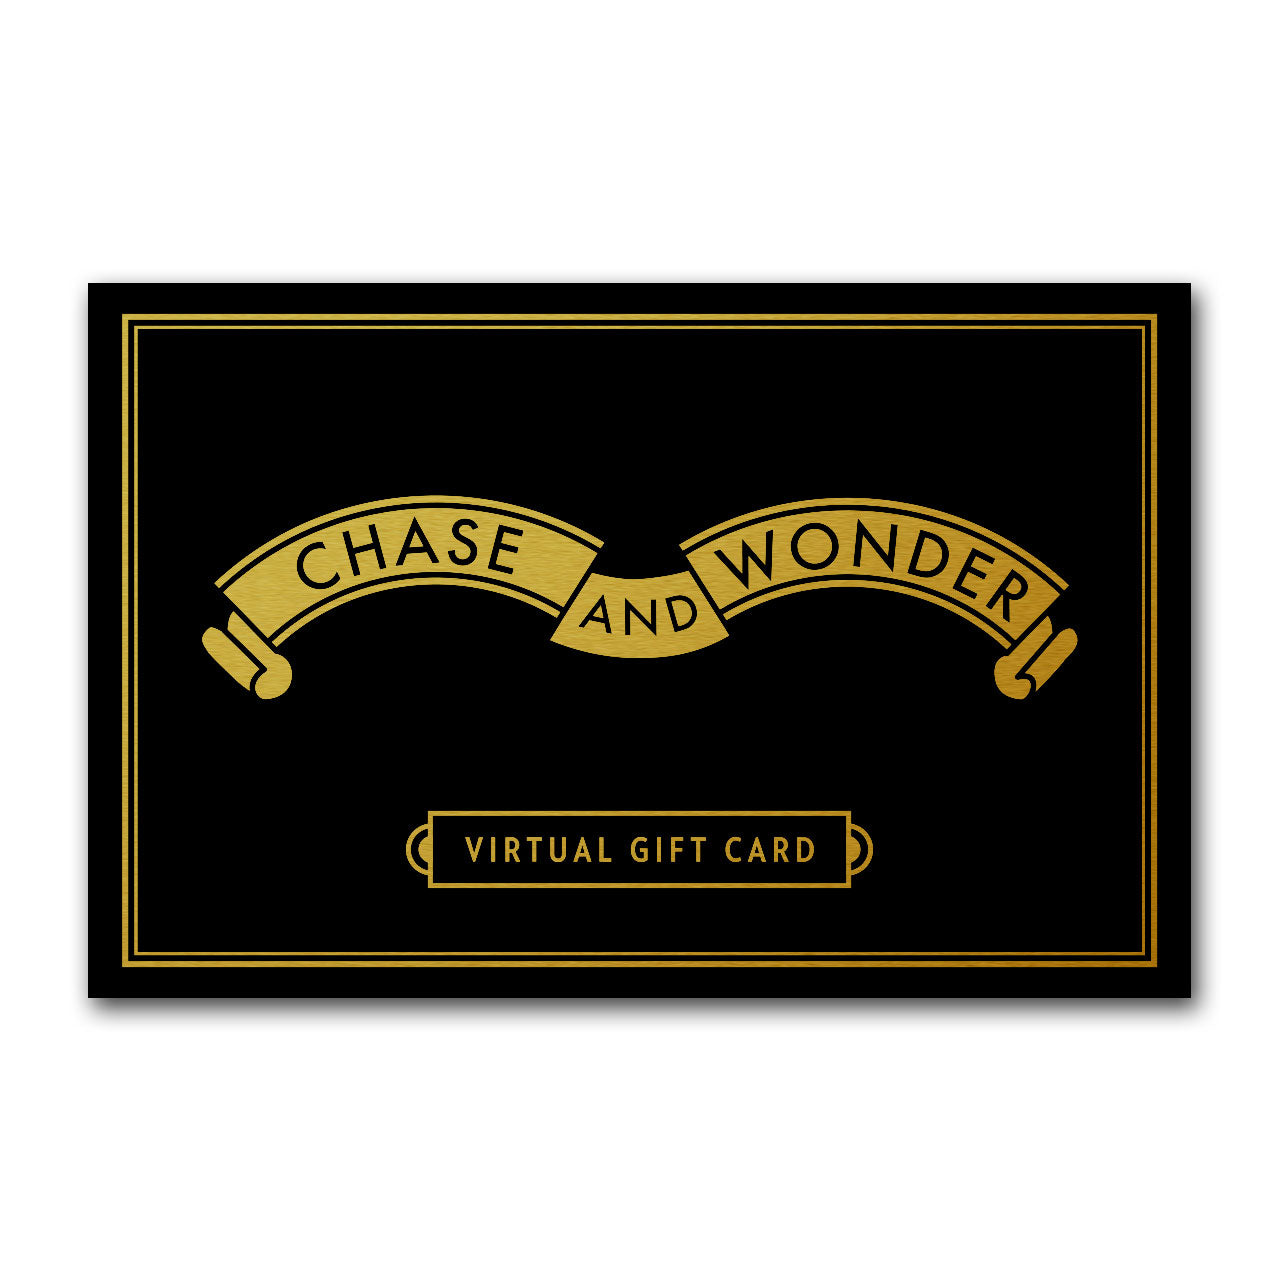 Chase and Wonder Gift Card - Virtual